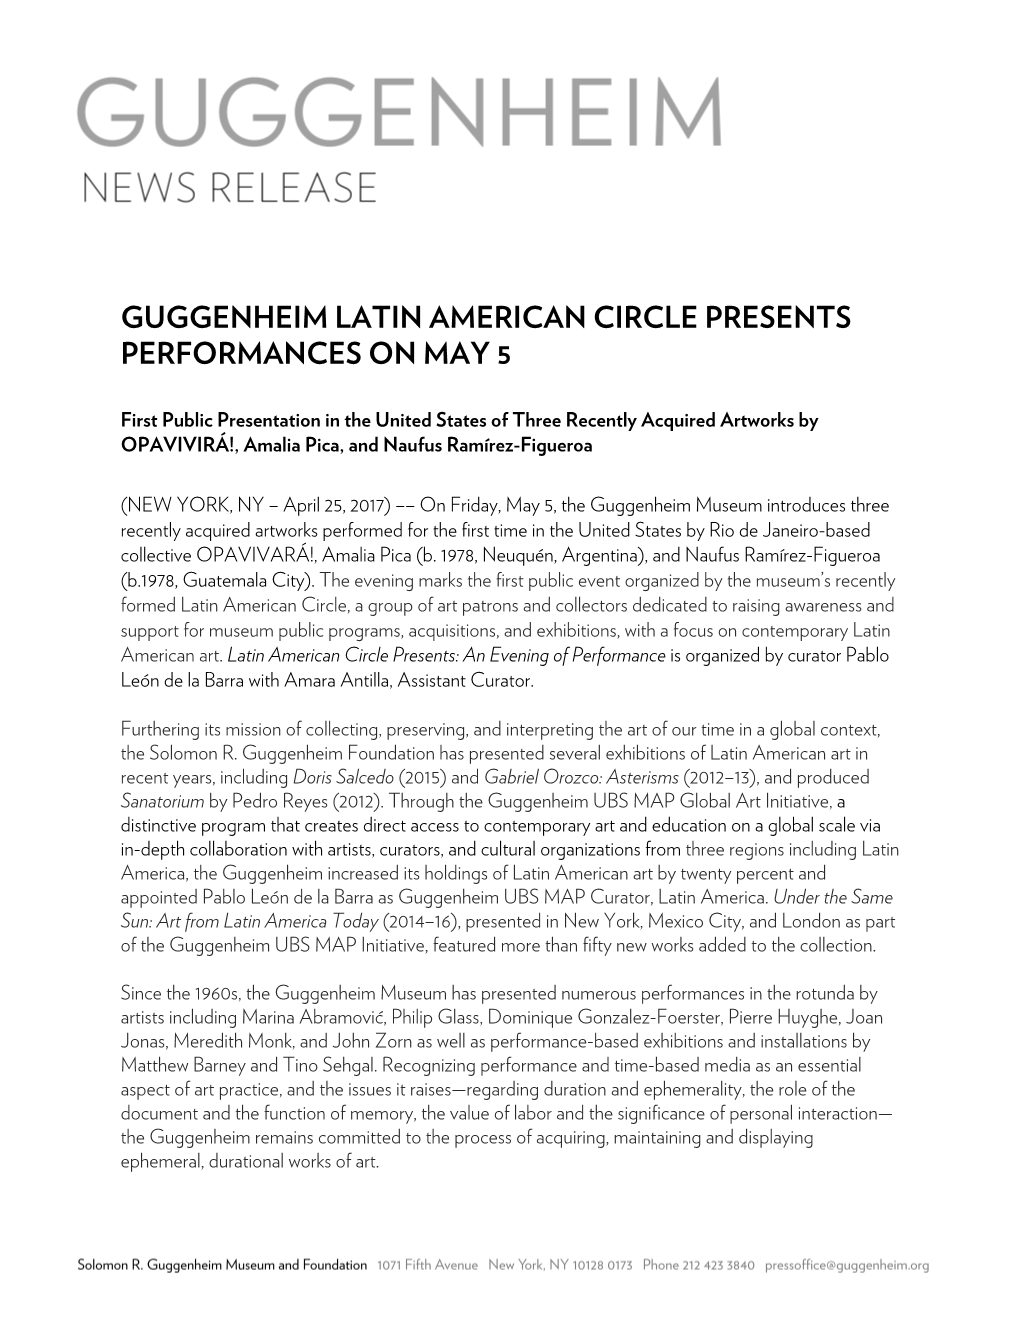 Guggenheim Latin American Circle Presents Performances on May 5